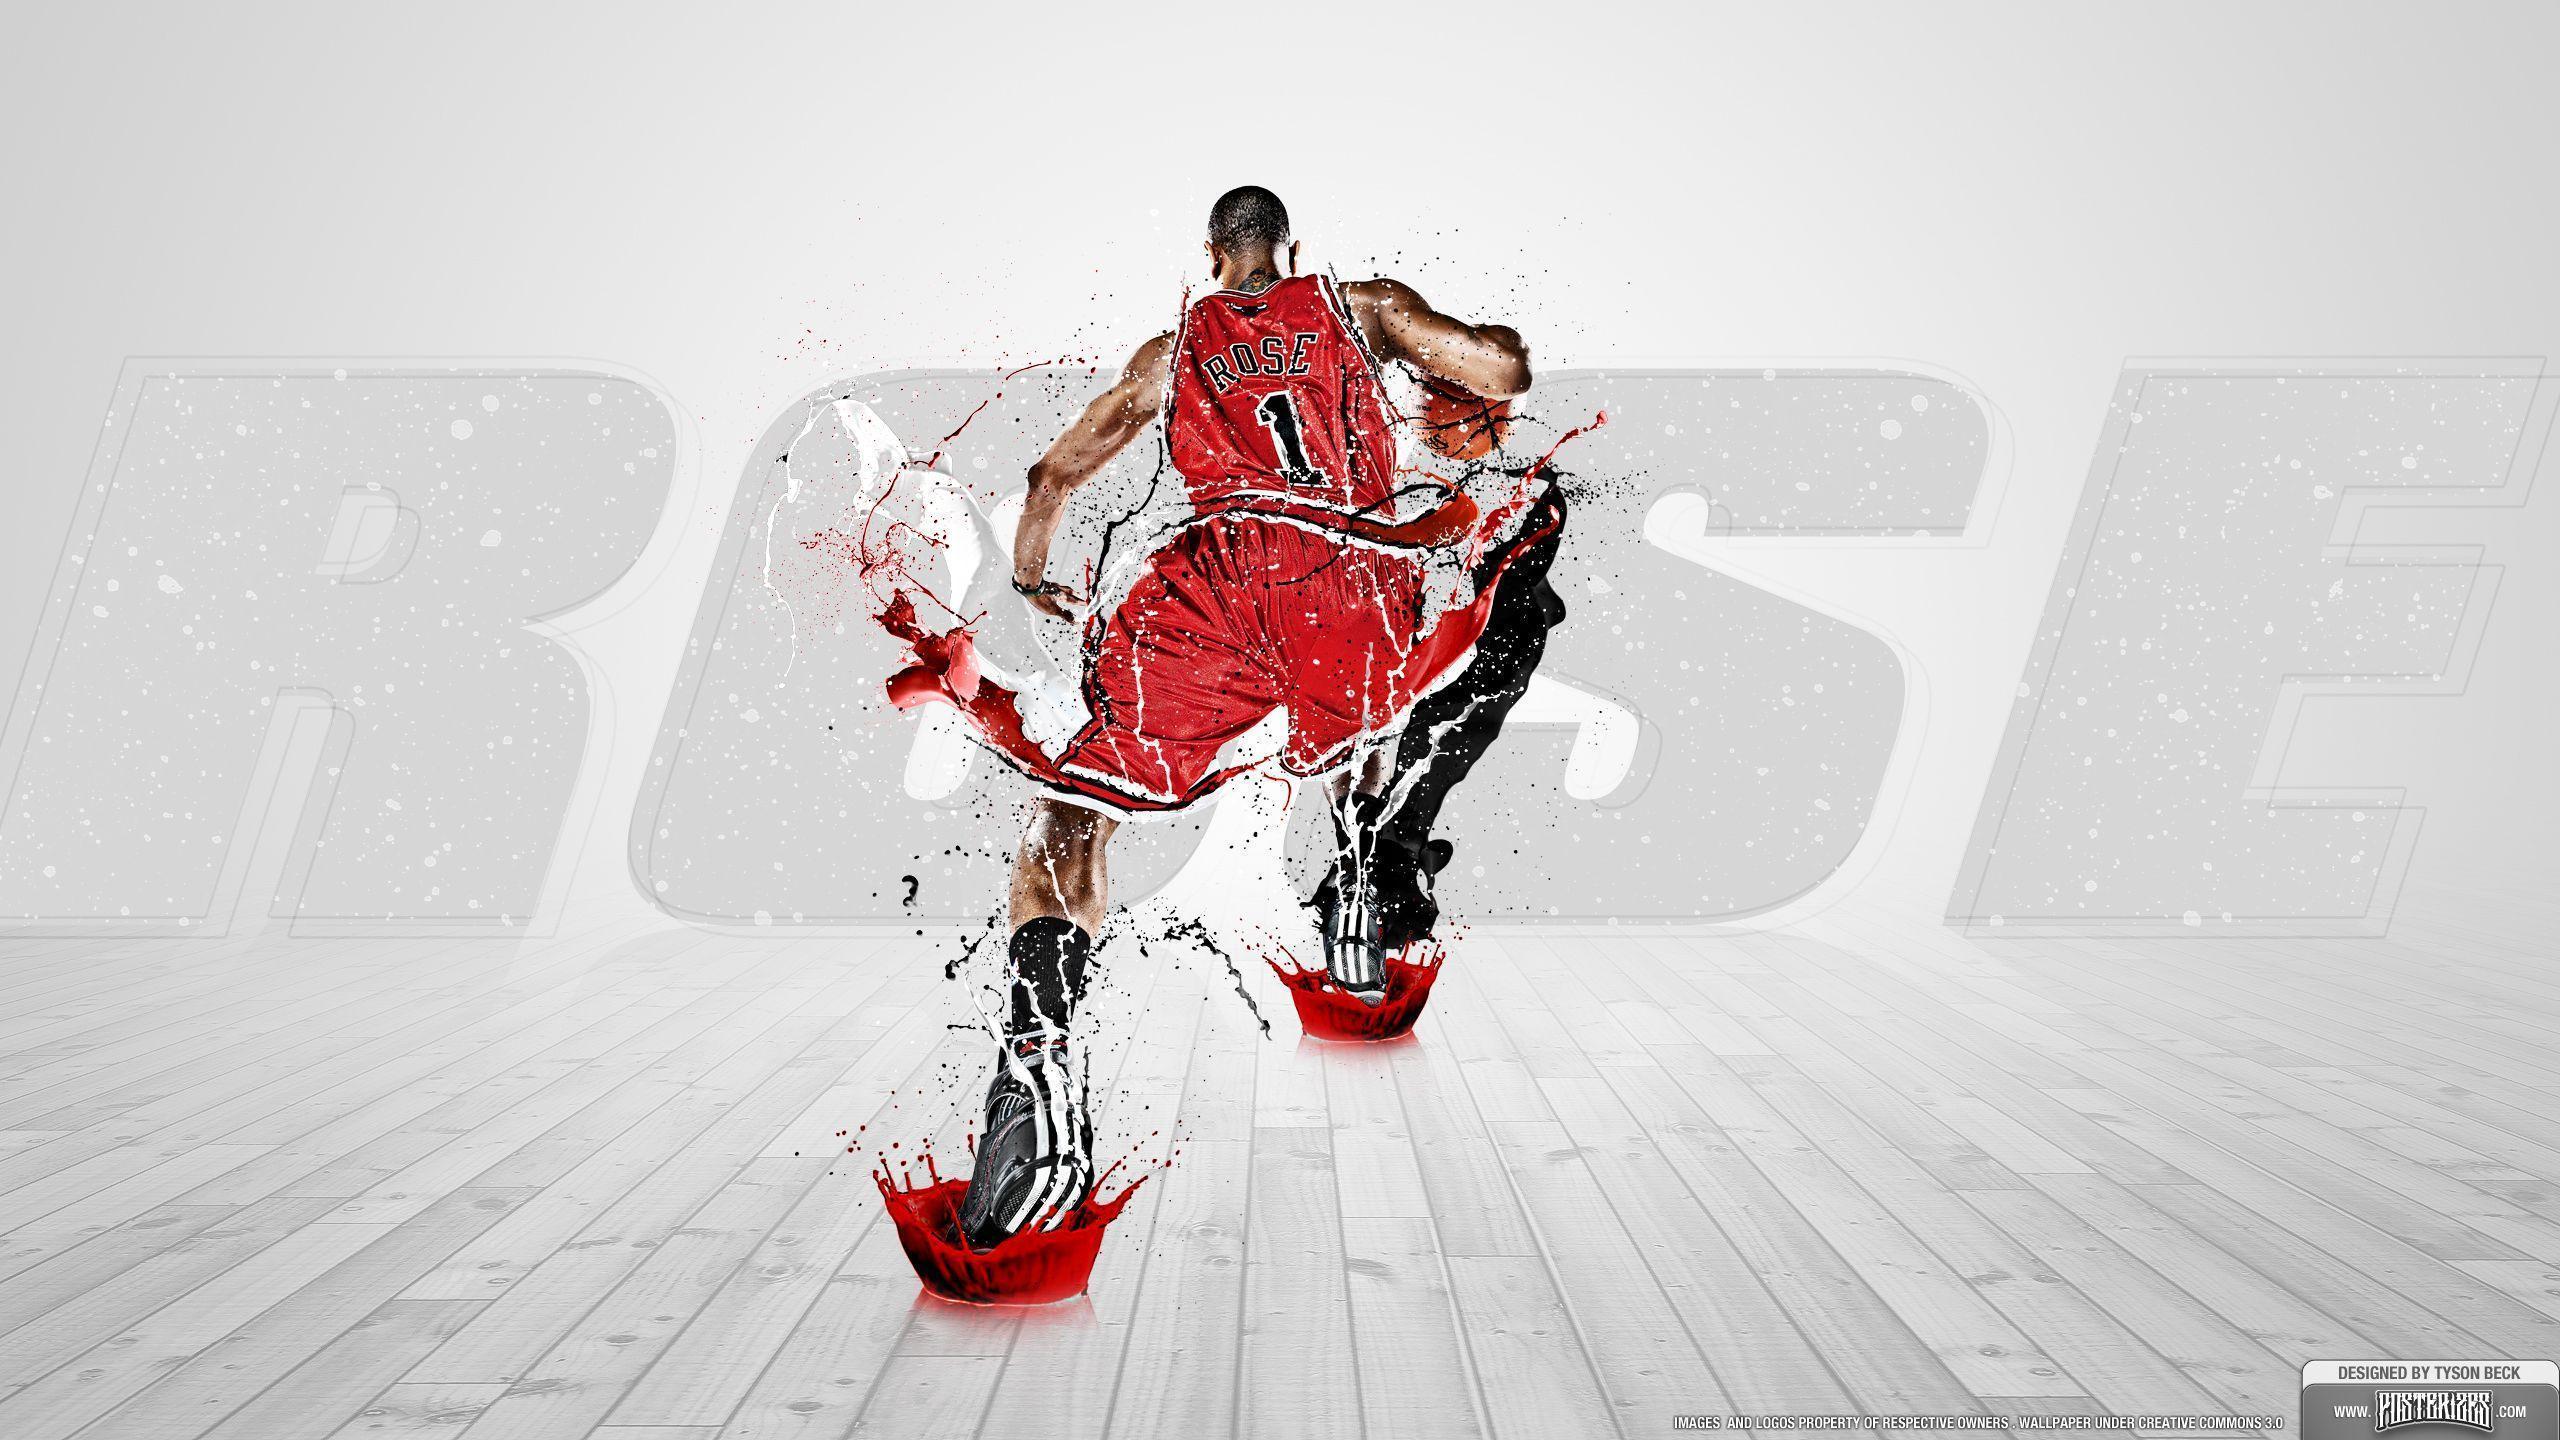 Chicago Bulls. Posterizes. NBA Wallpaper & Basketball Designs